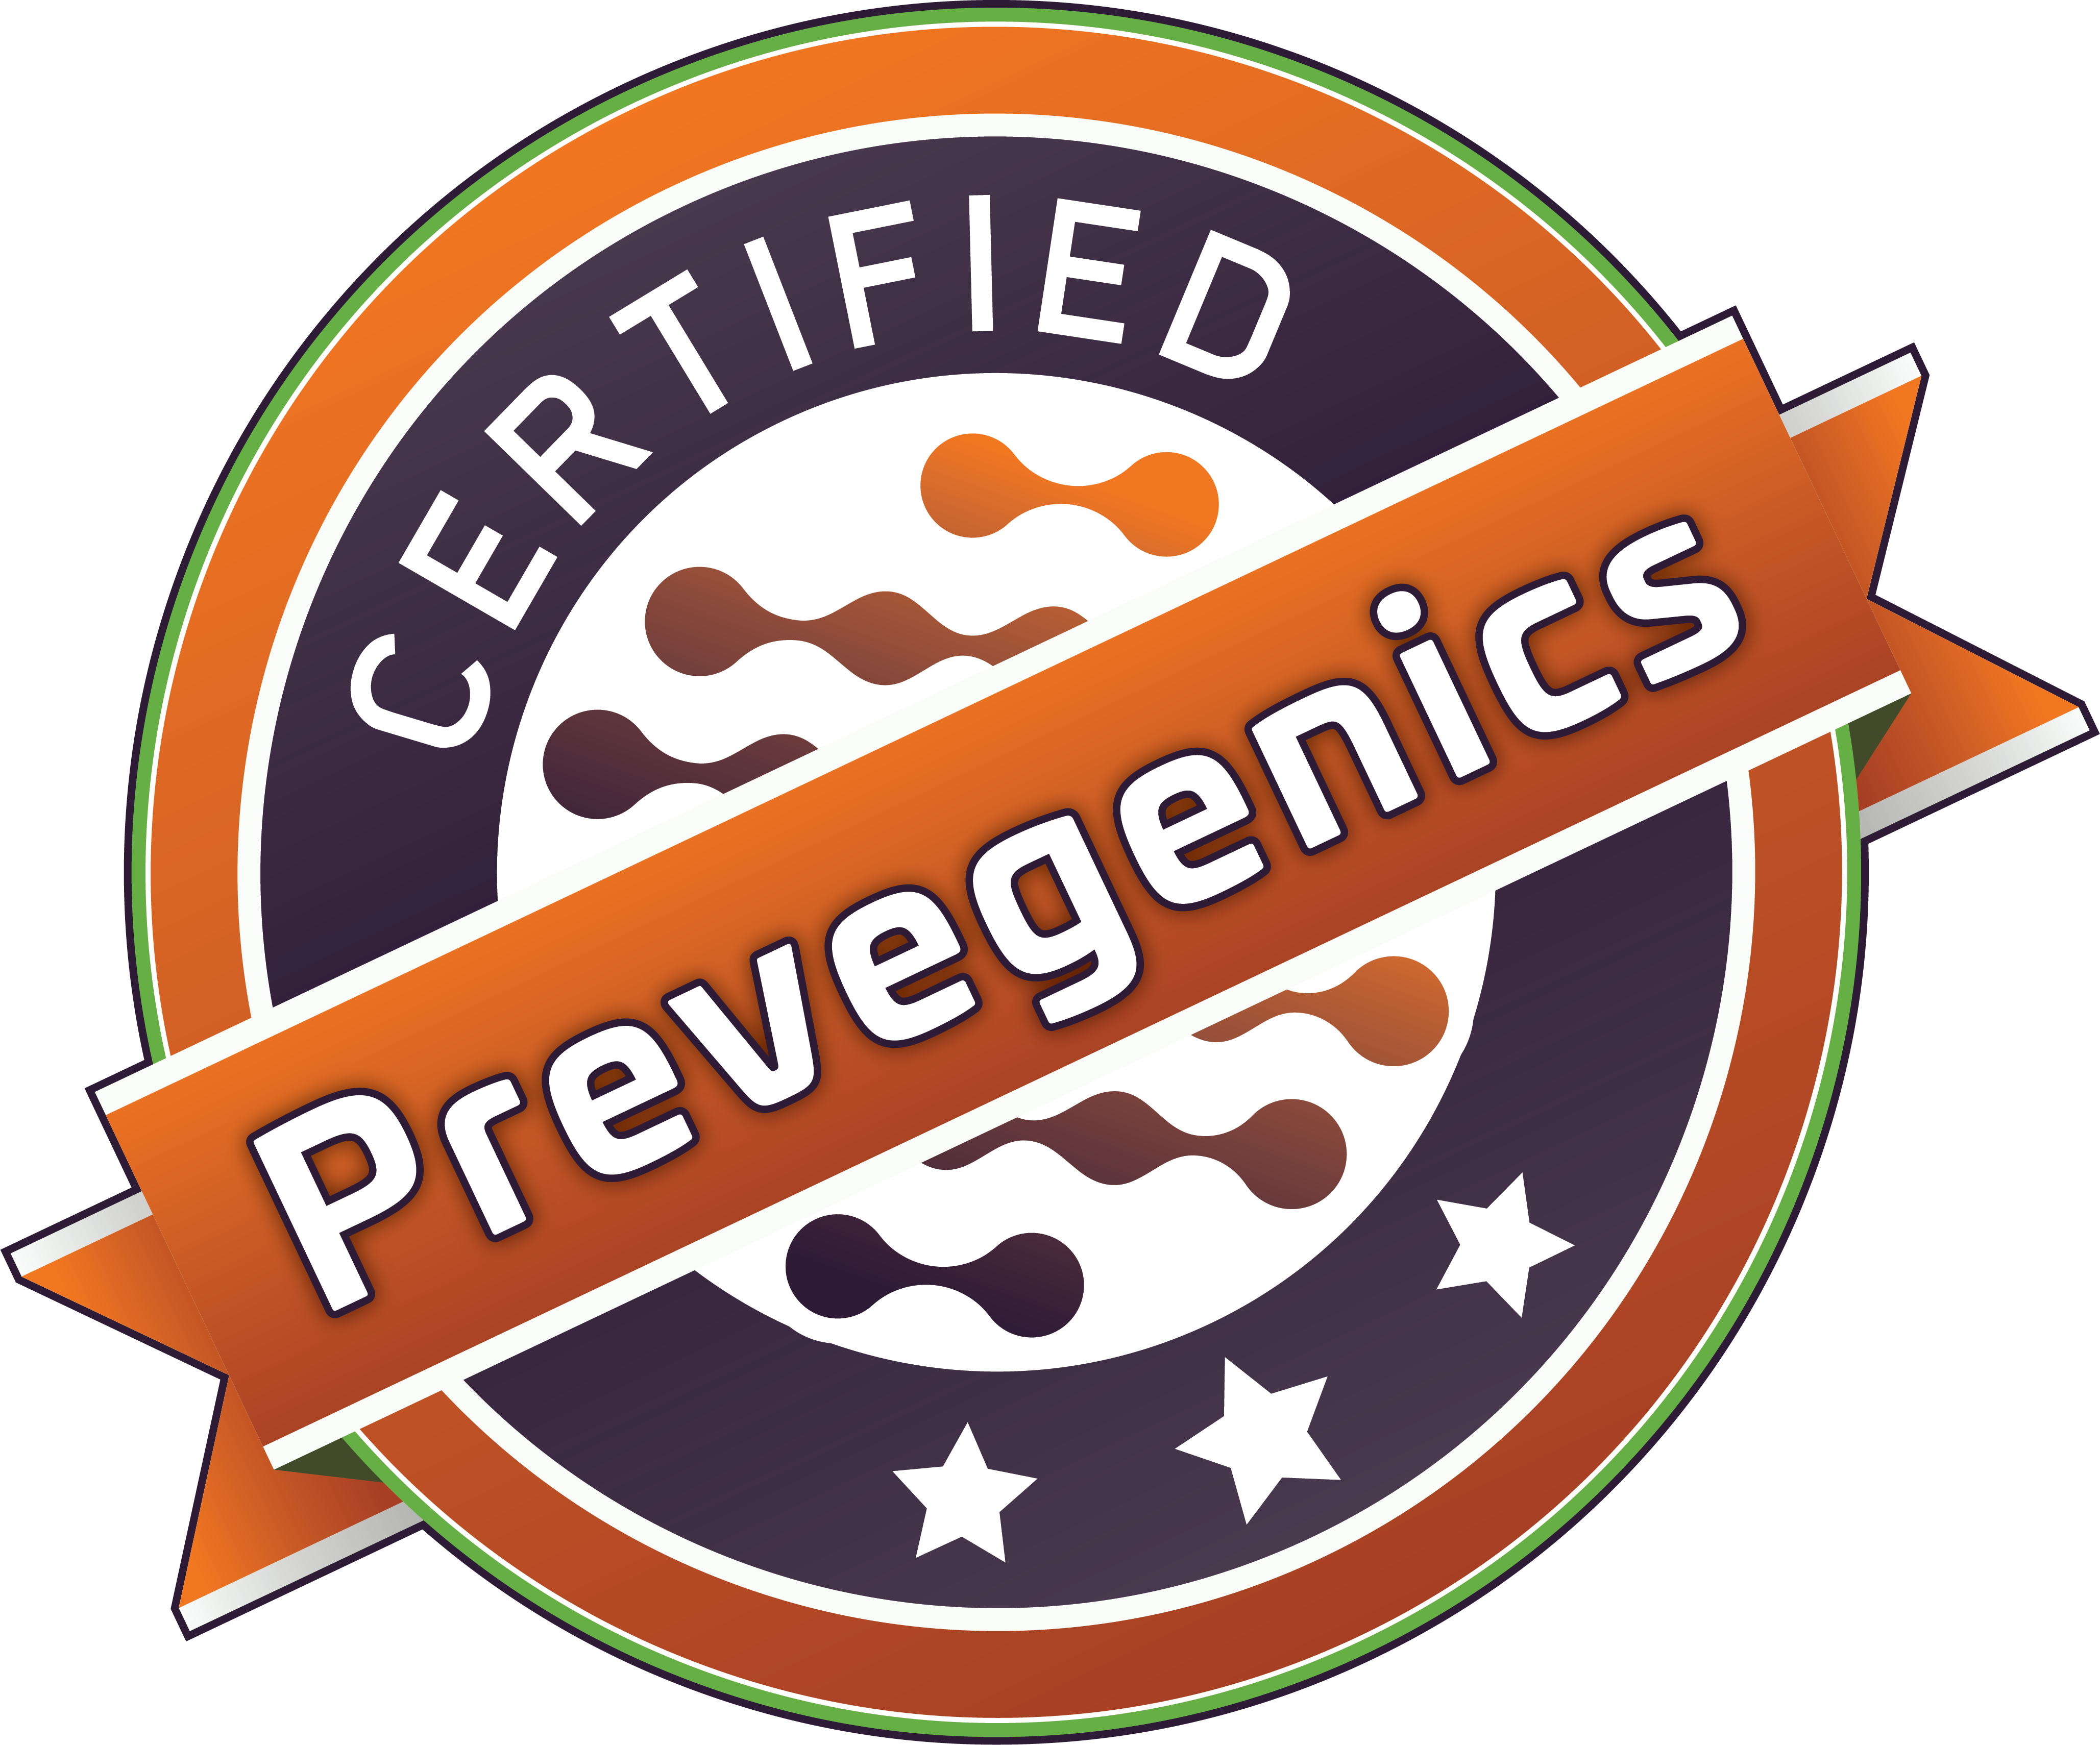       What Is Certified Prevegenics?